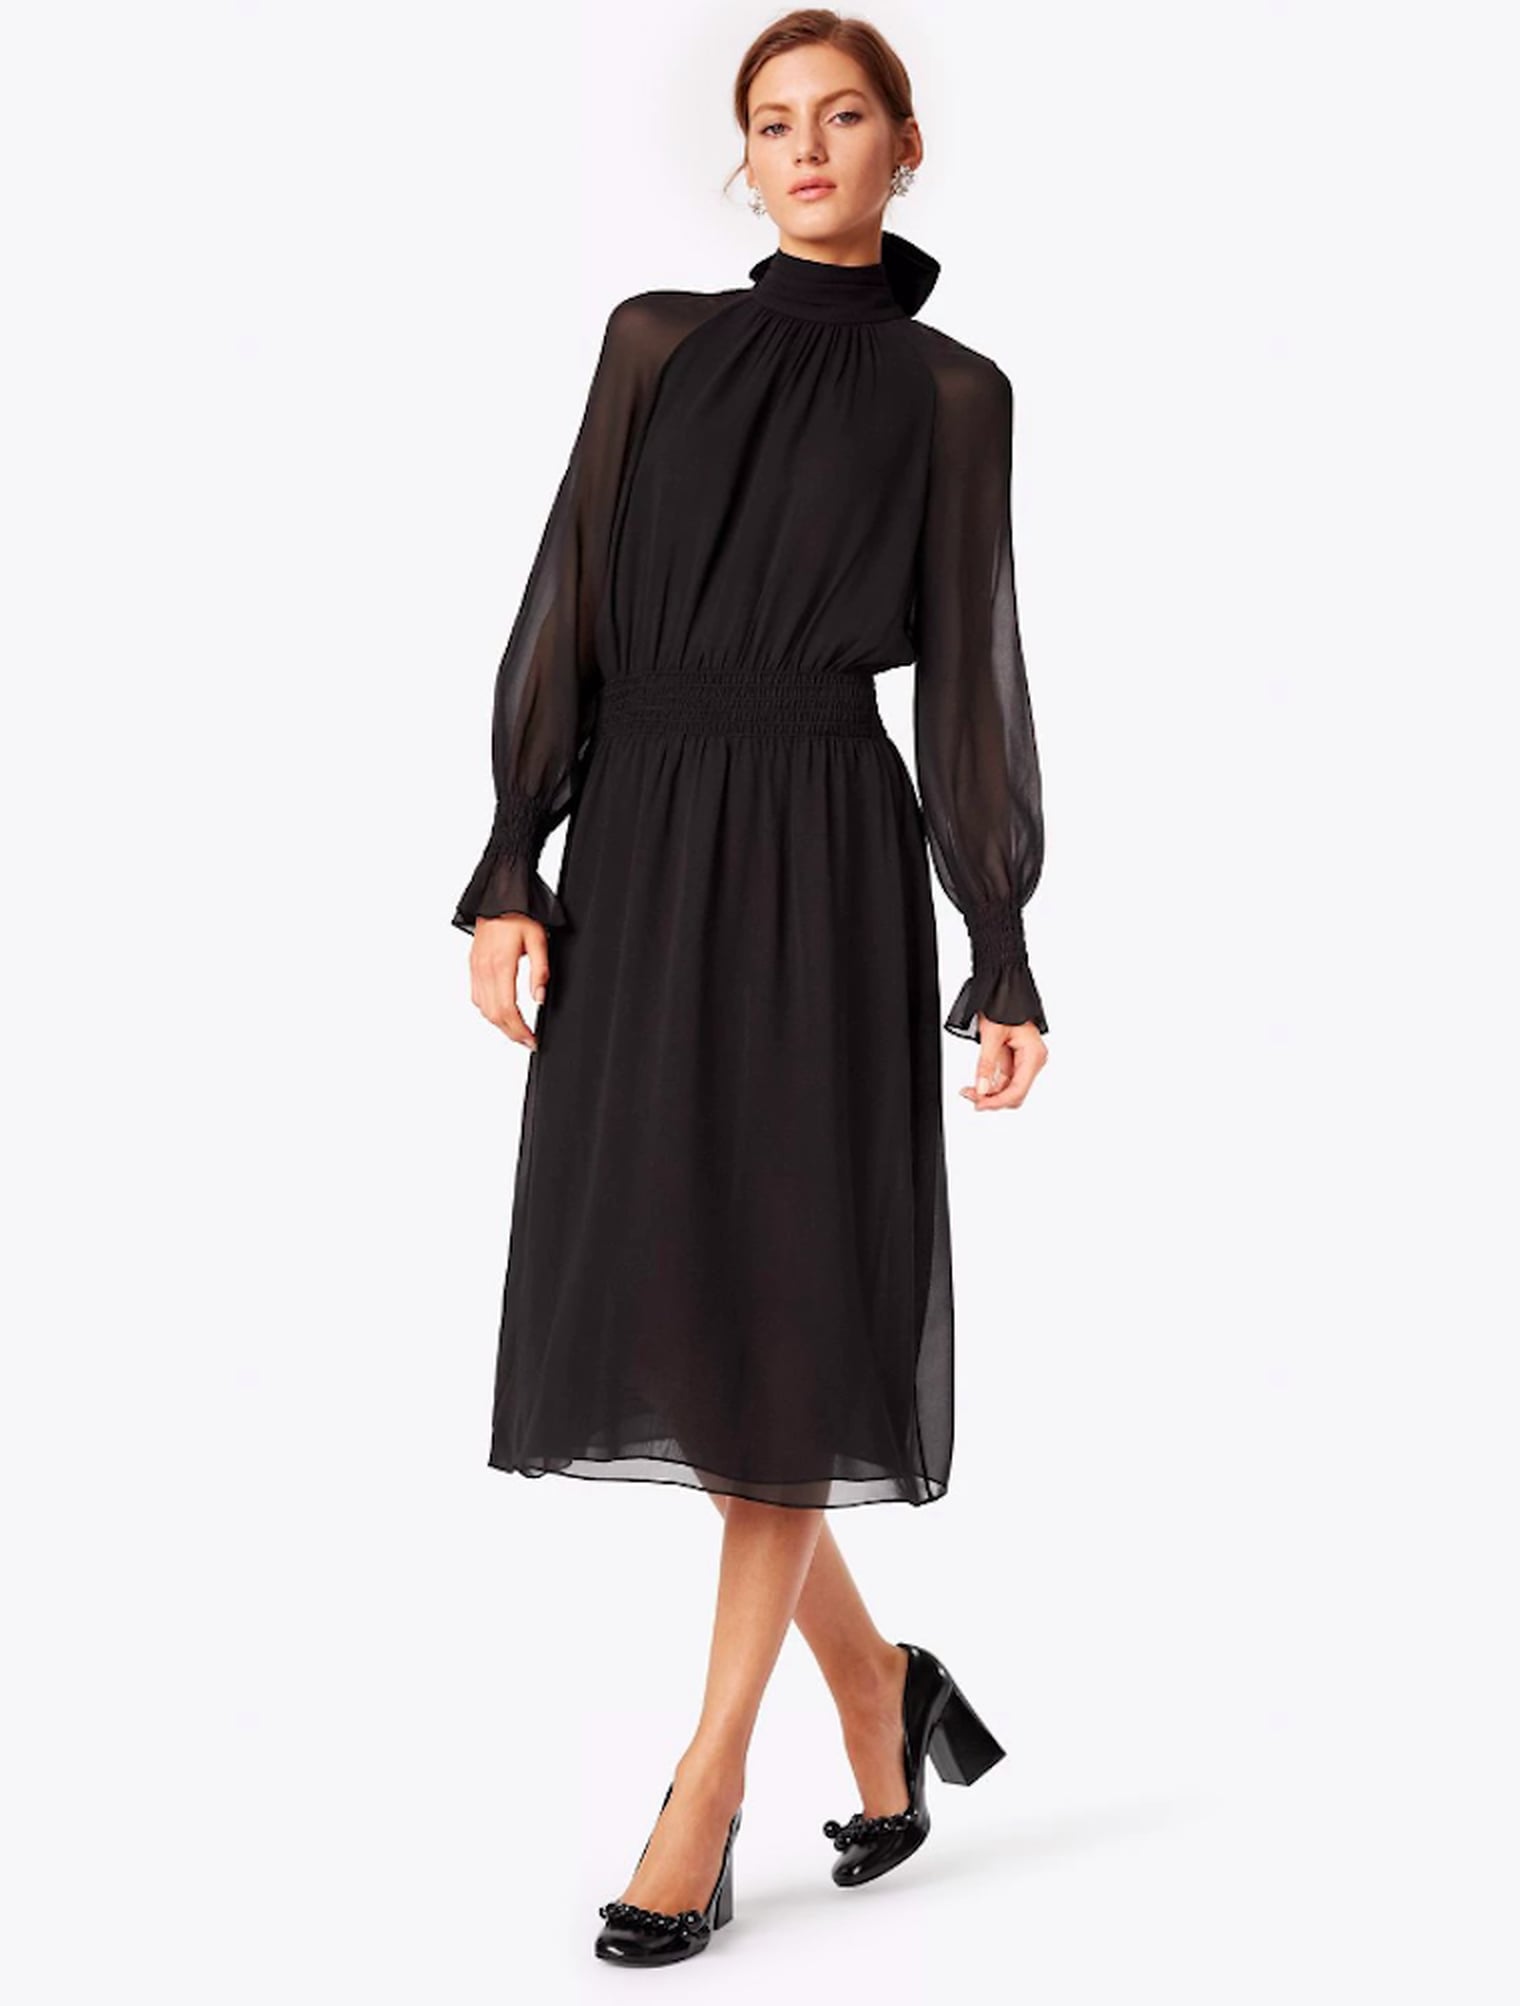 Melania Trump Black Dress With Big Sleeves | POPSUGAR Fashion